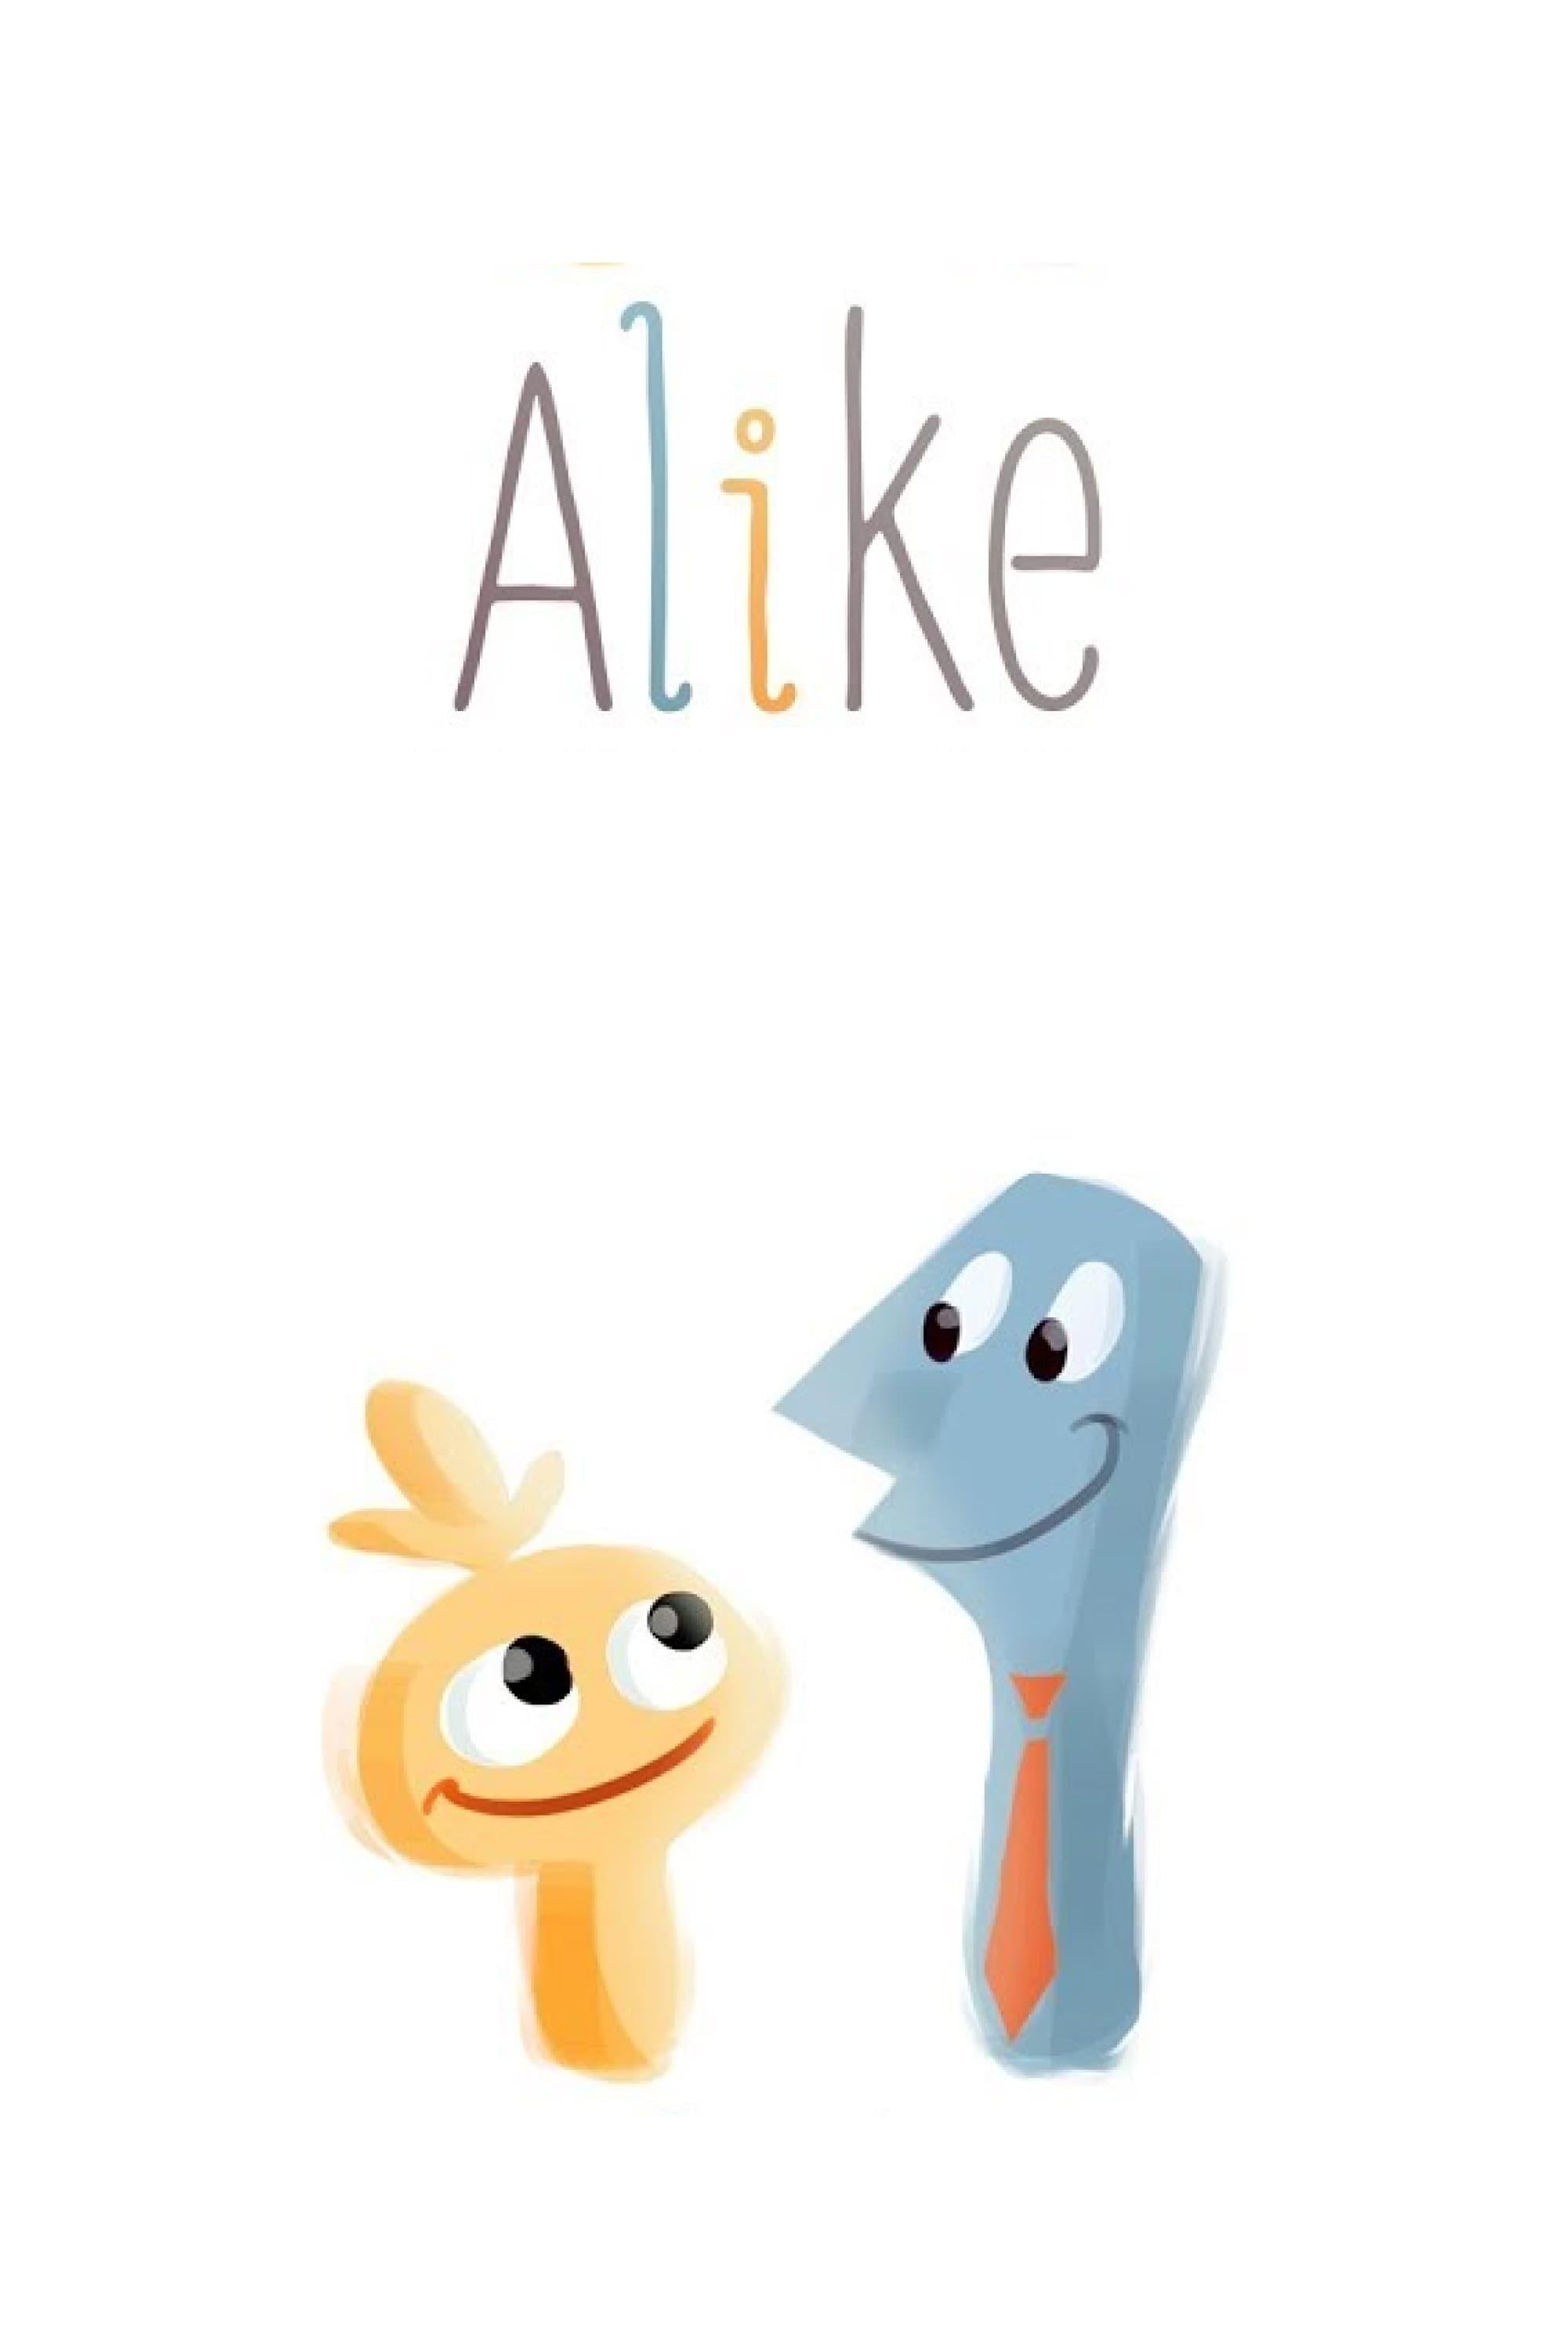 Alike poster